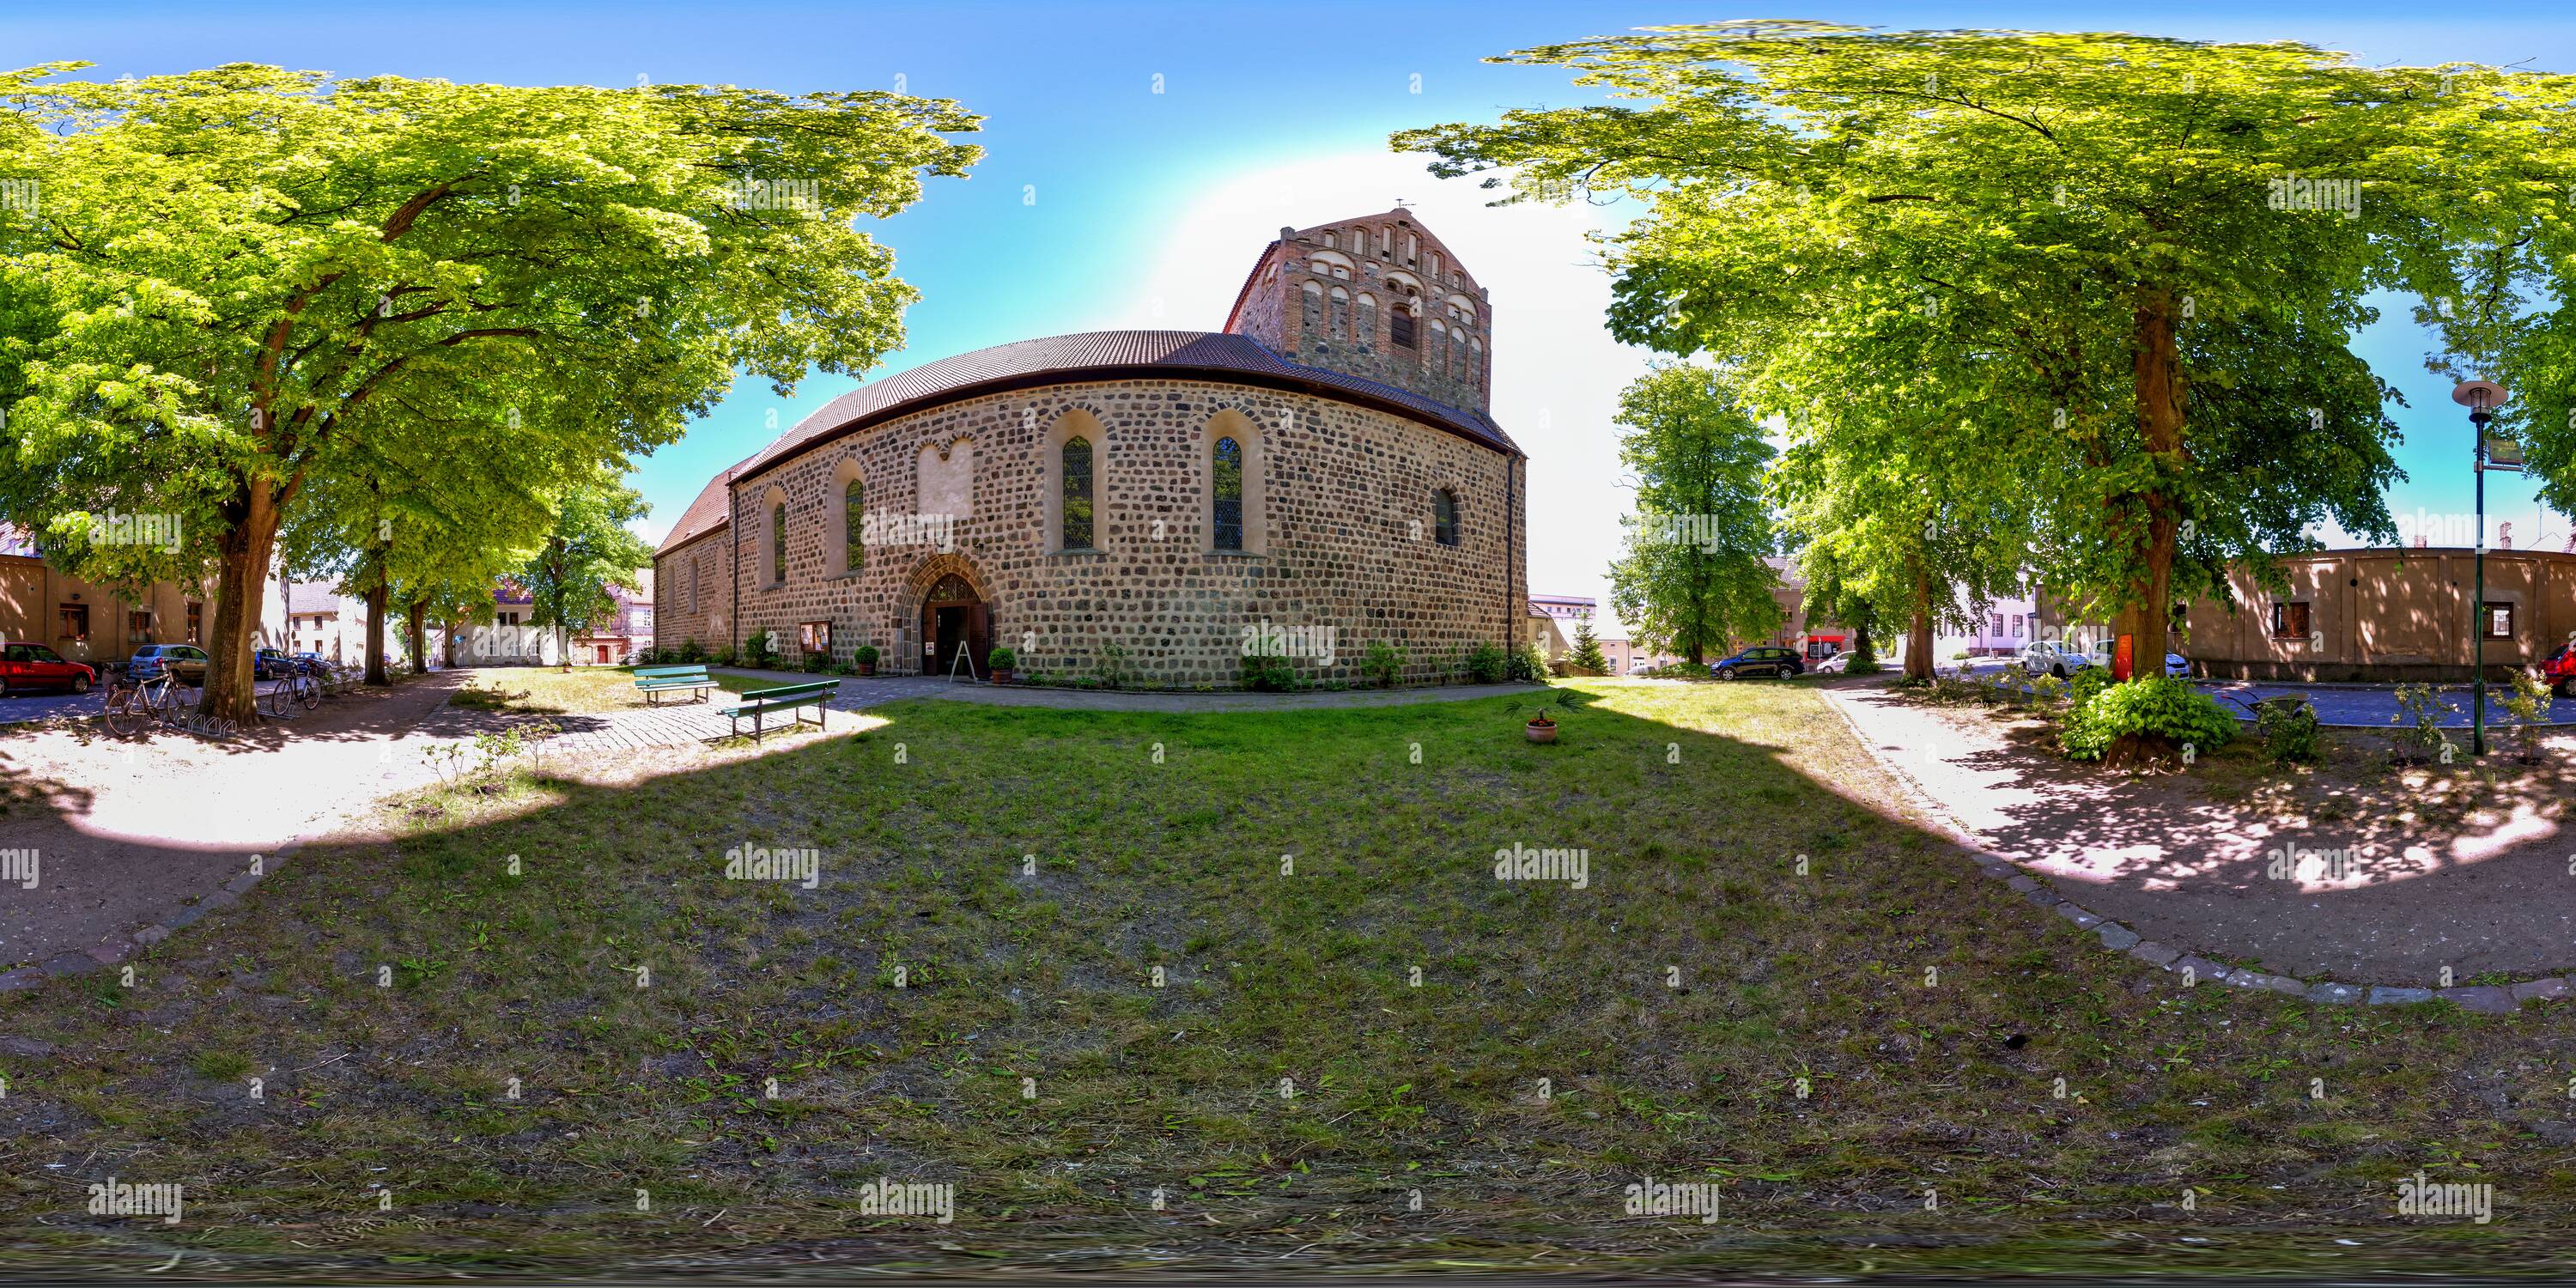 360 degree panoramic view of Lychen Kirche